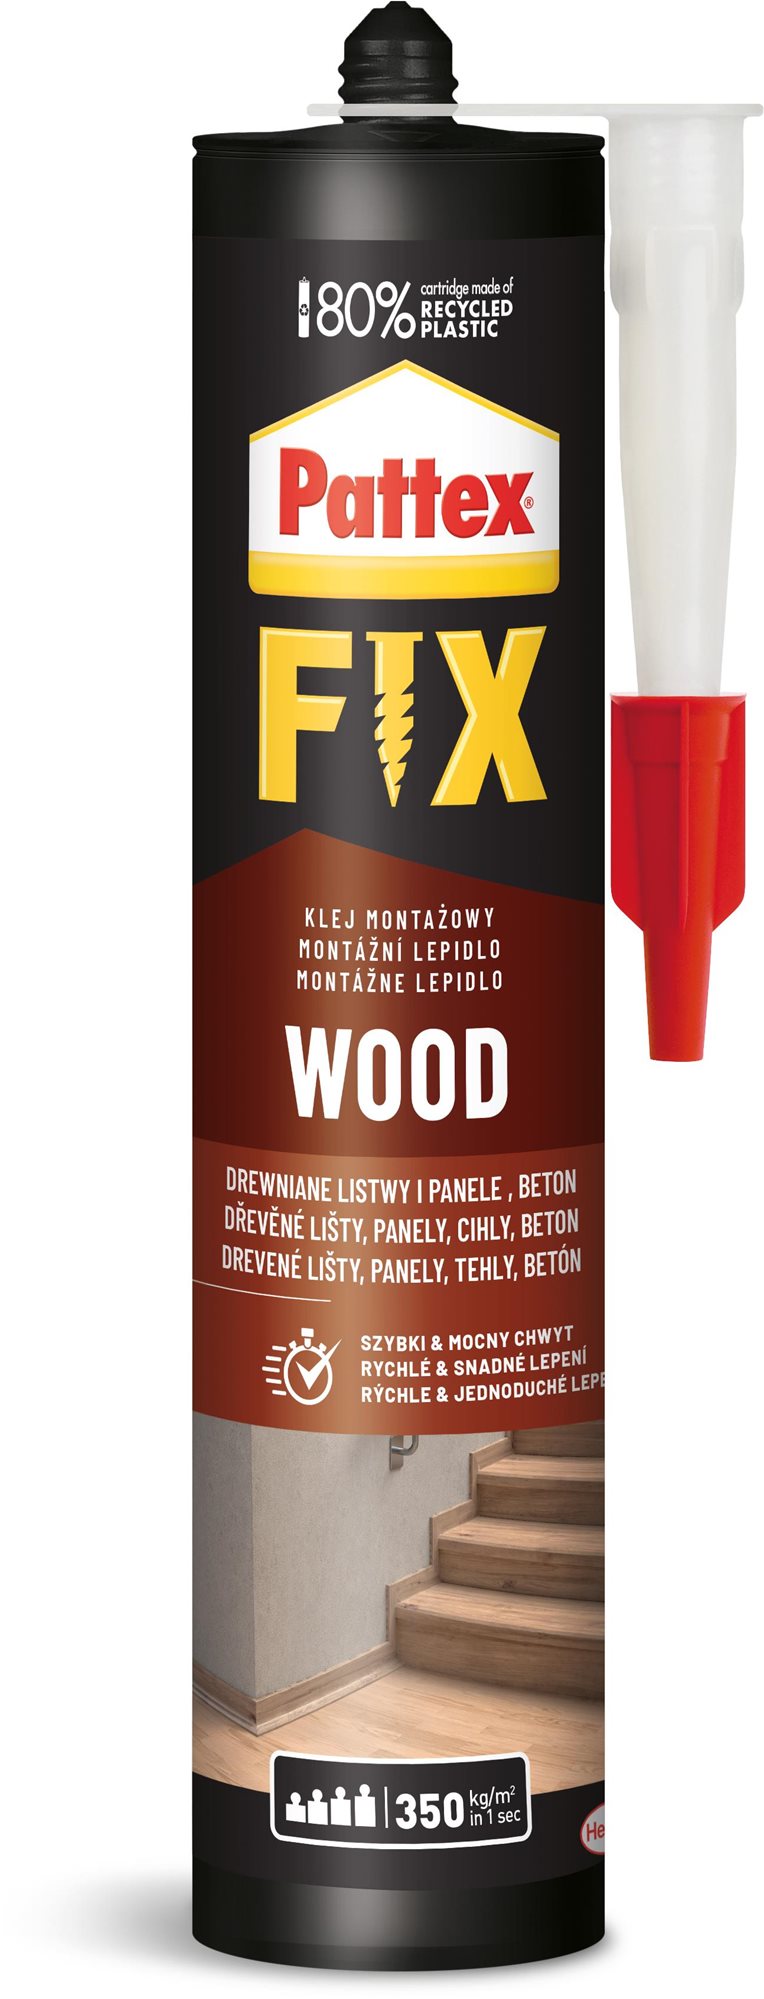 PATTEX FIX Wood (fa) 385 g